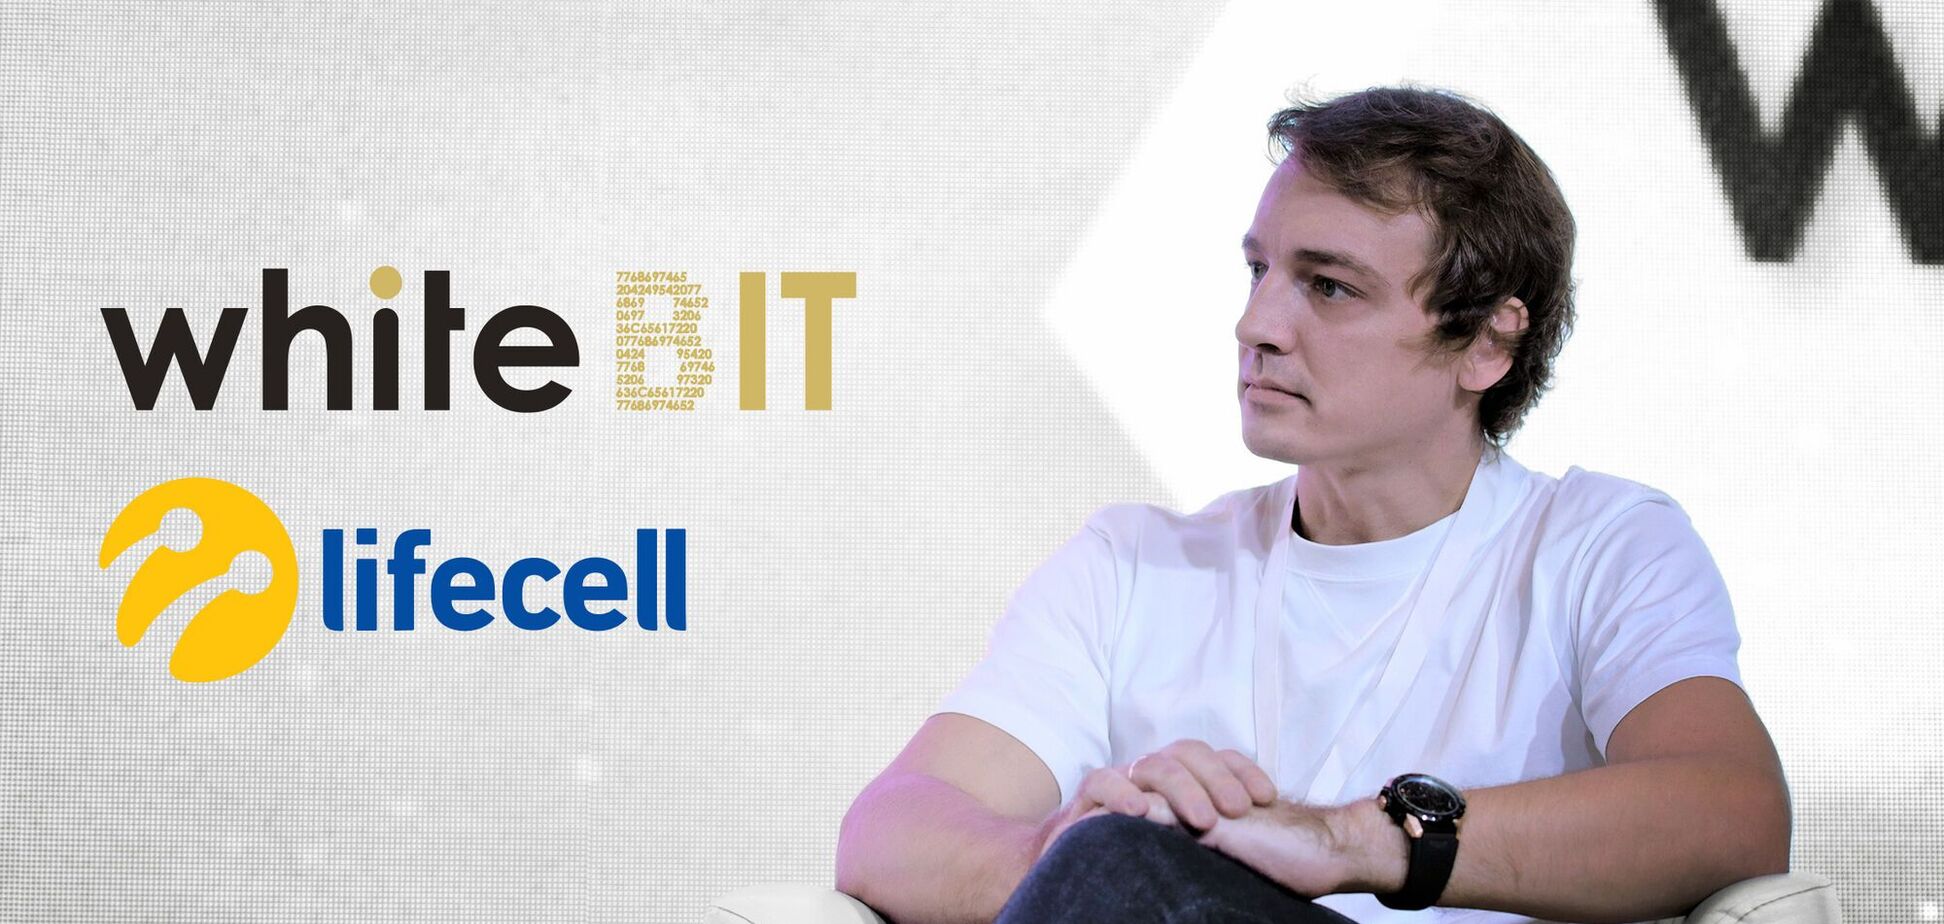 WhiteBIT и lifecell начинают партнерство